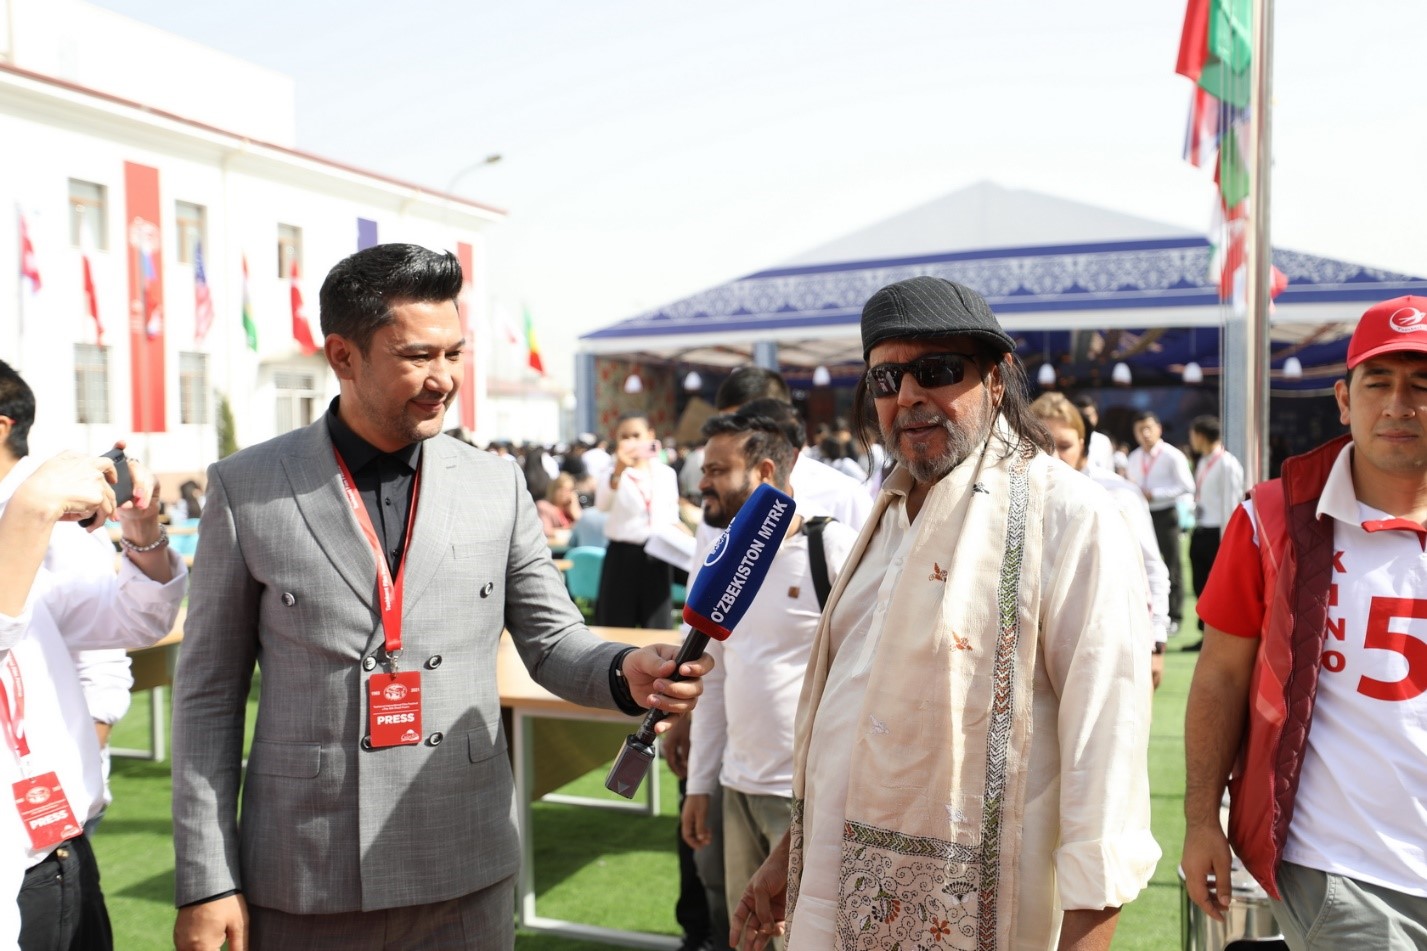 Bollywood star Mithun Chakraborty visited Tashkent within the framework of the International Film Festival.